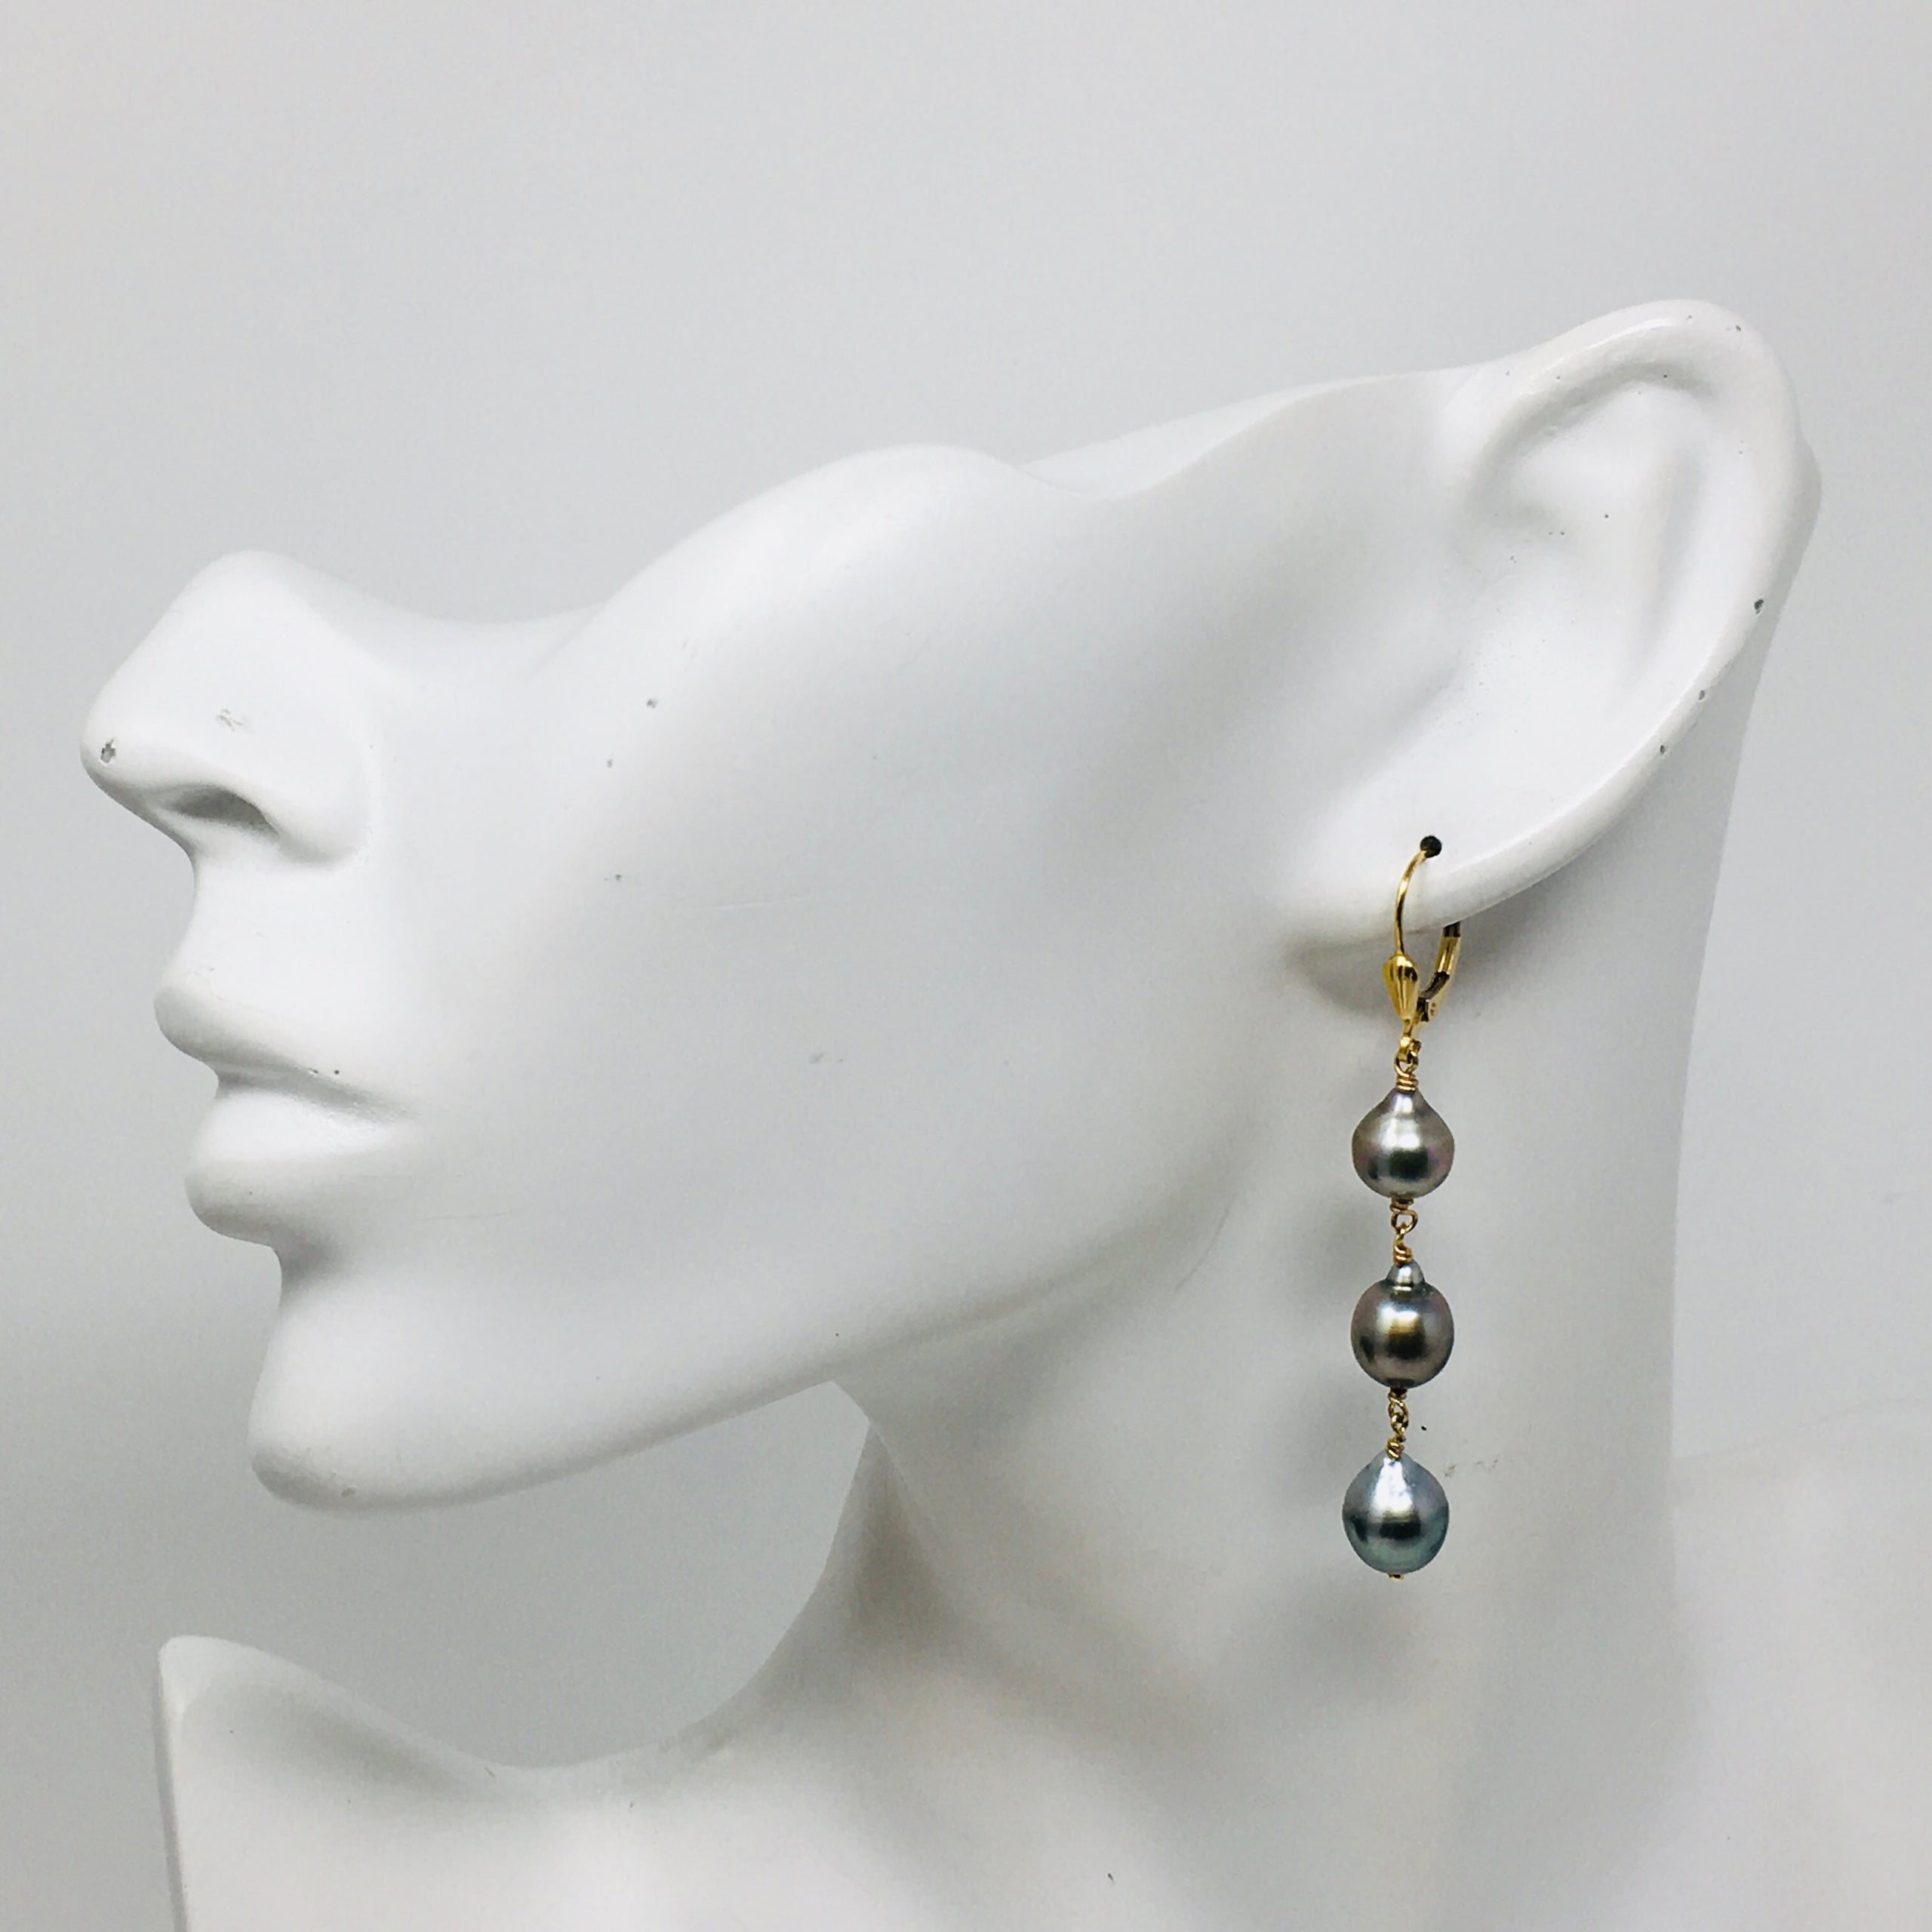 Tahitian Pearl Earrings